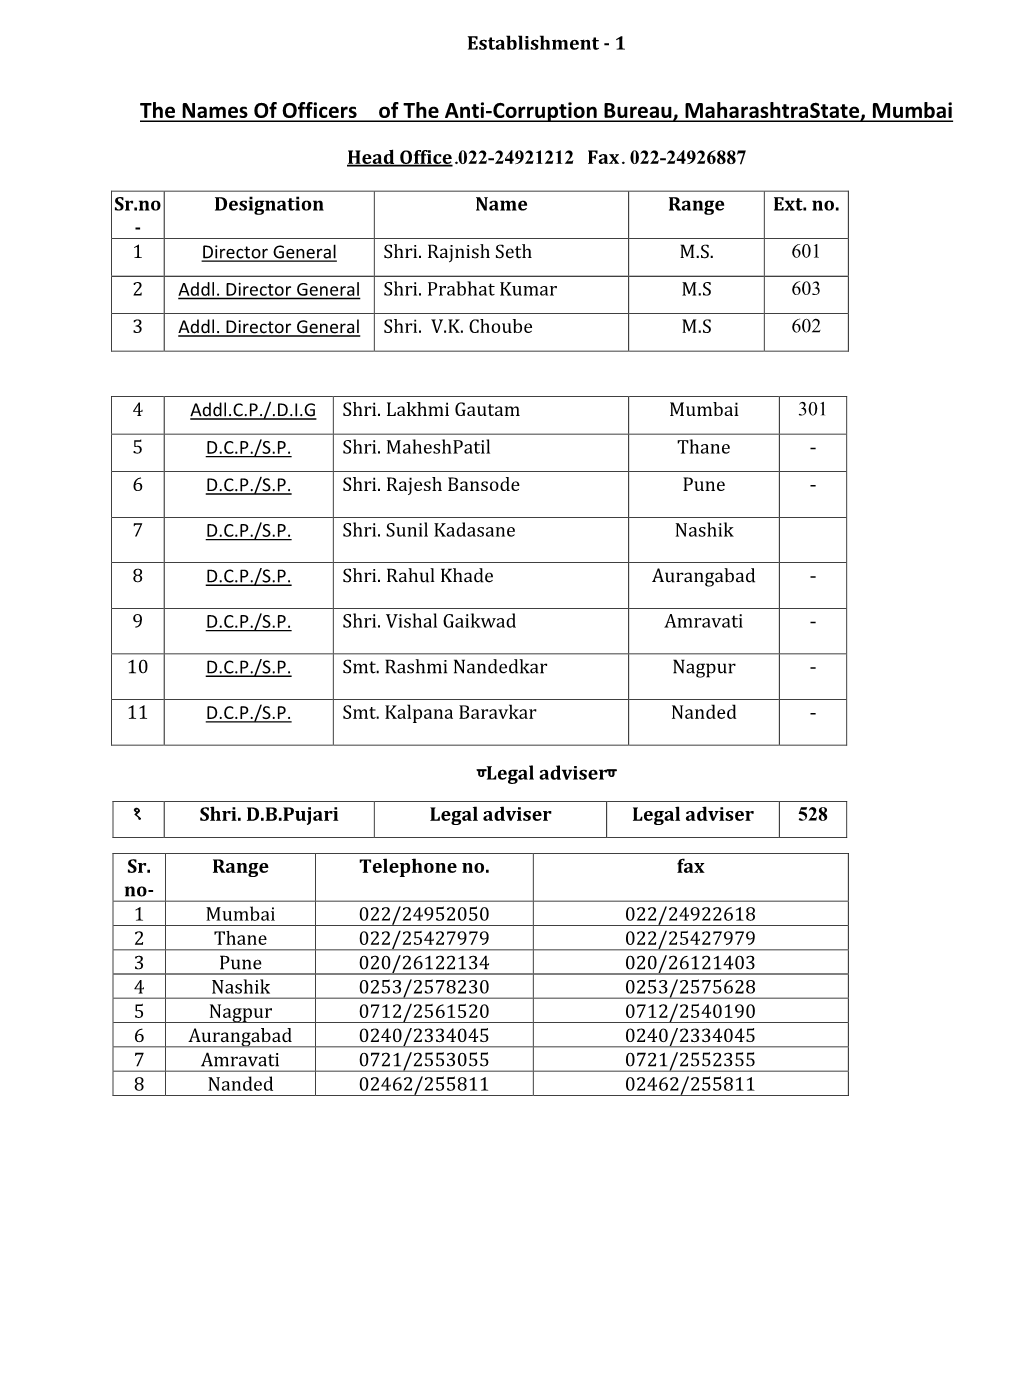 The Names of Officers of the Anti-Corruption Bureau, Maharashtrastate, Mumbai